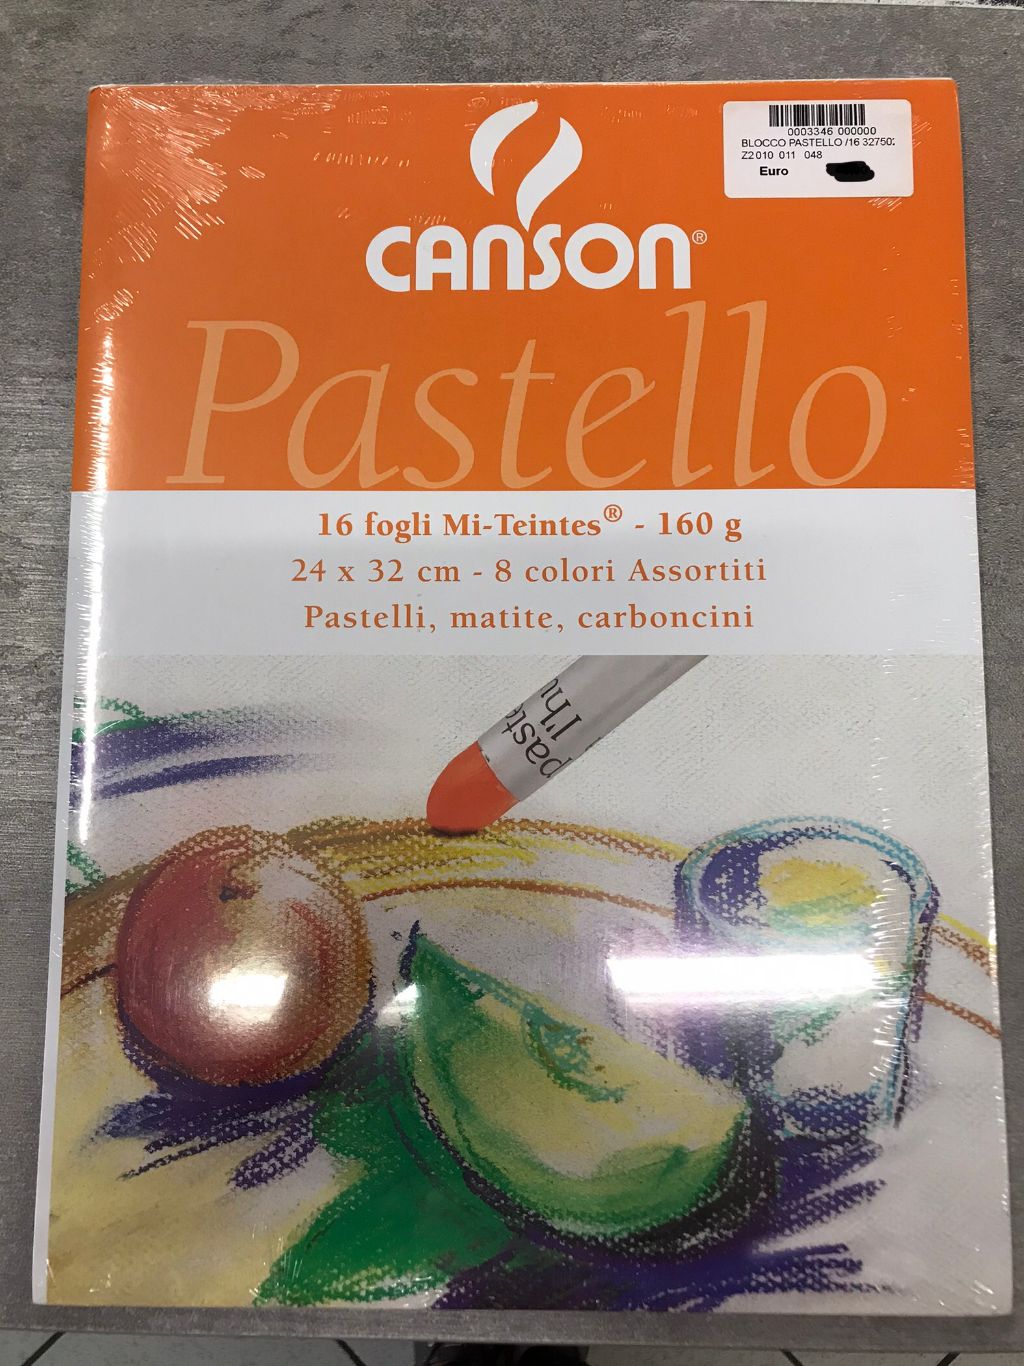 Canson pastello